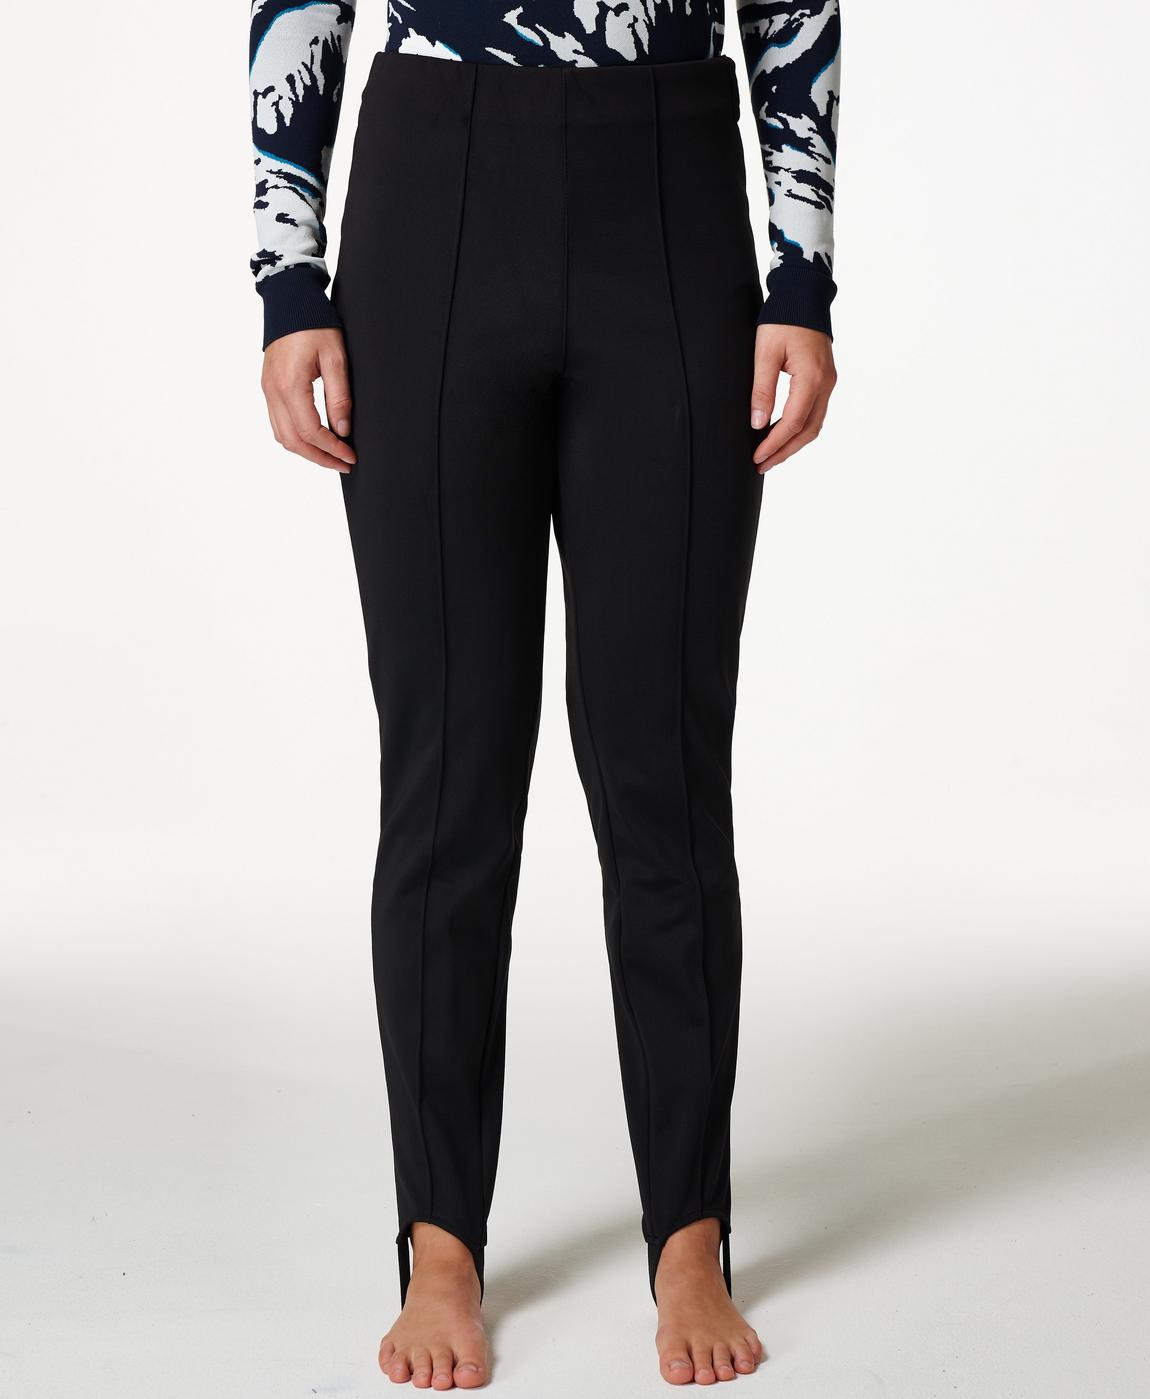 Off Piste Stirrup Ski Pants - Black, Women's Ski Clothes